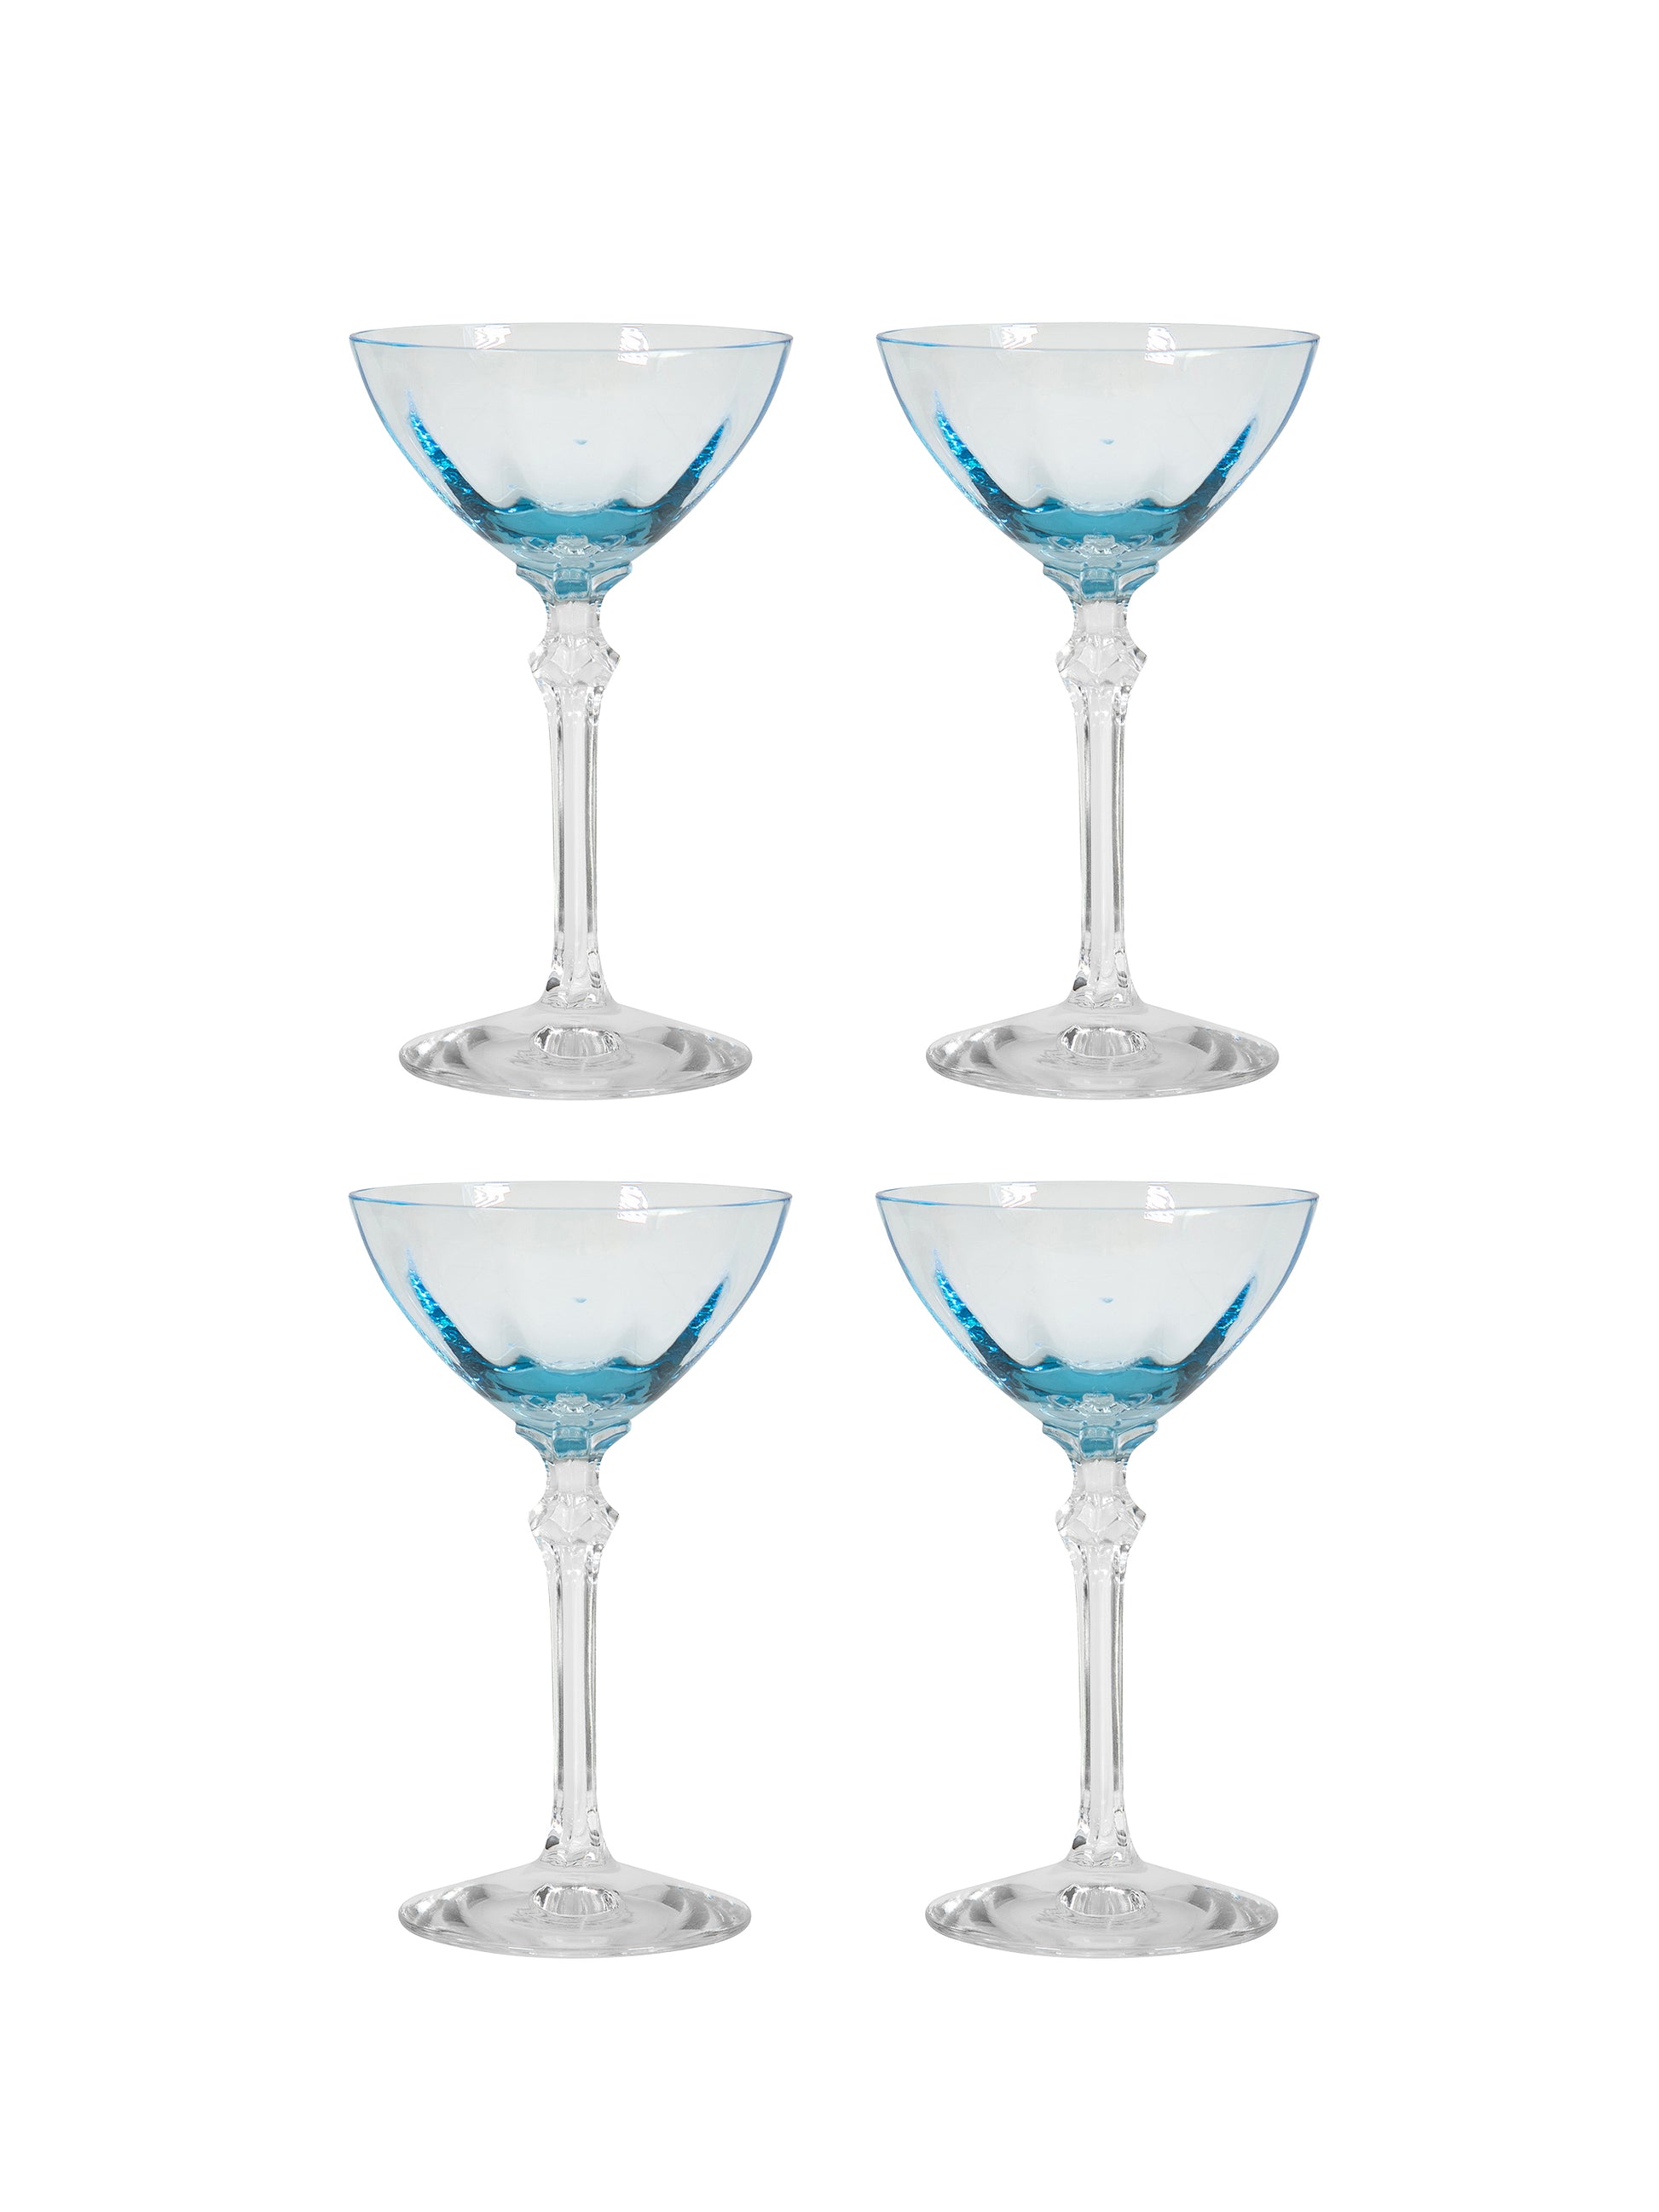 Vintage 1920s Fairfax Champagne Glasses Weston Table